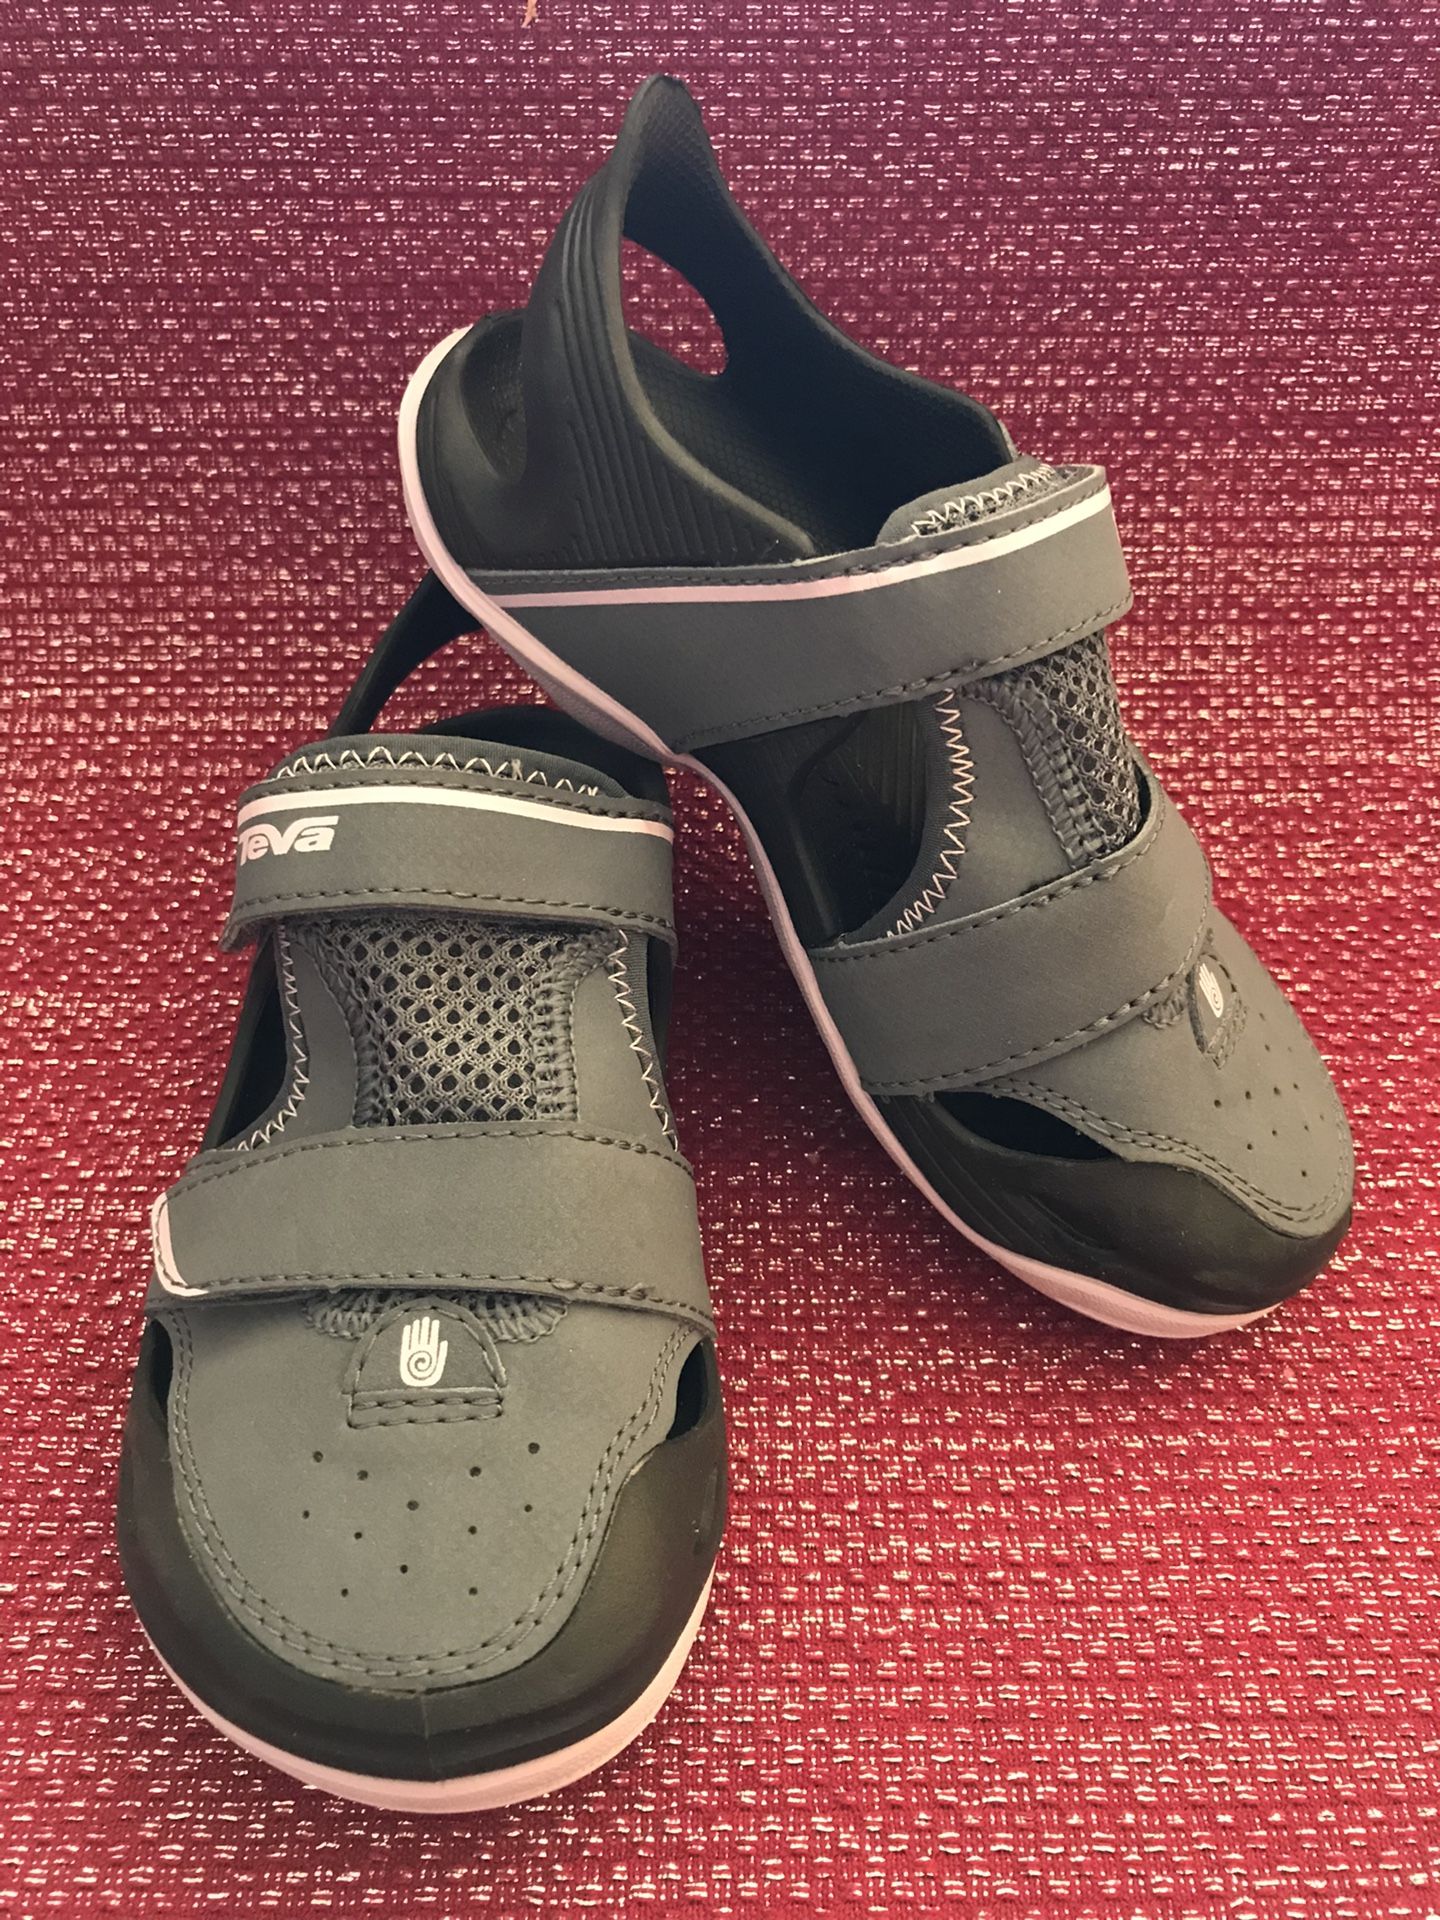 NEW Kids Sports waterproof Sandals Slip On Toddler Size 12